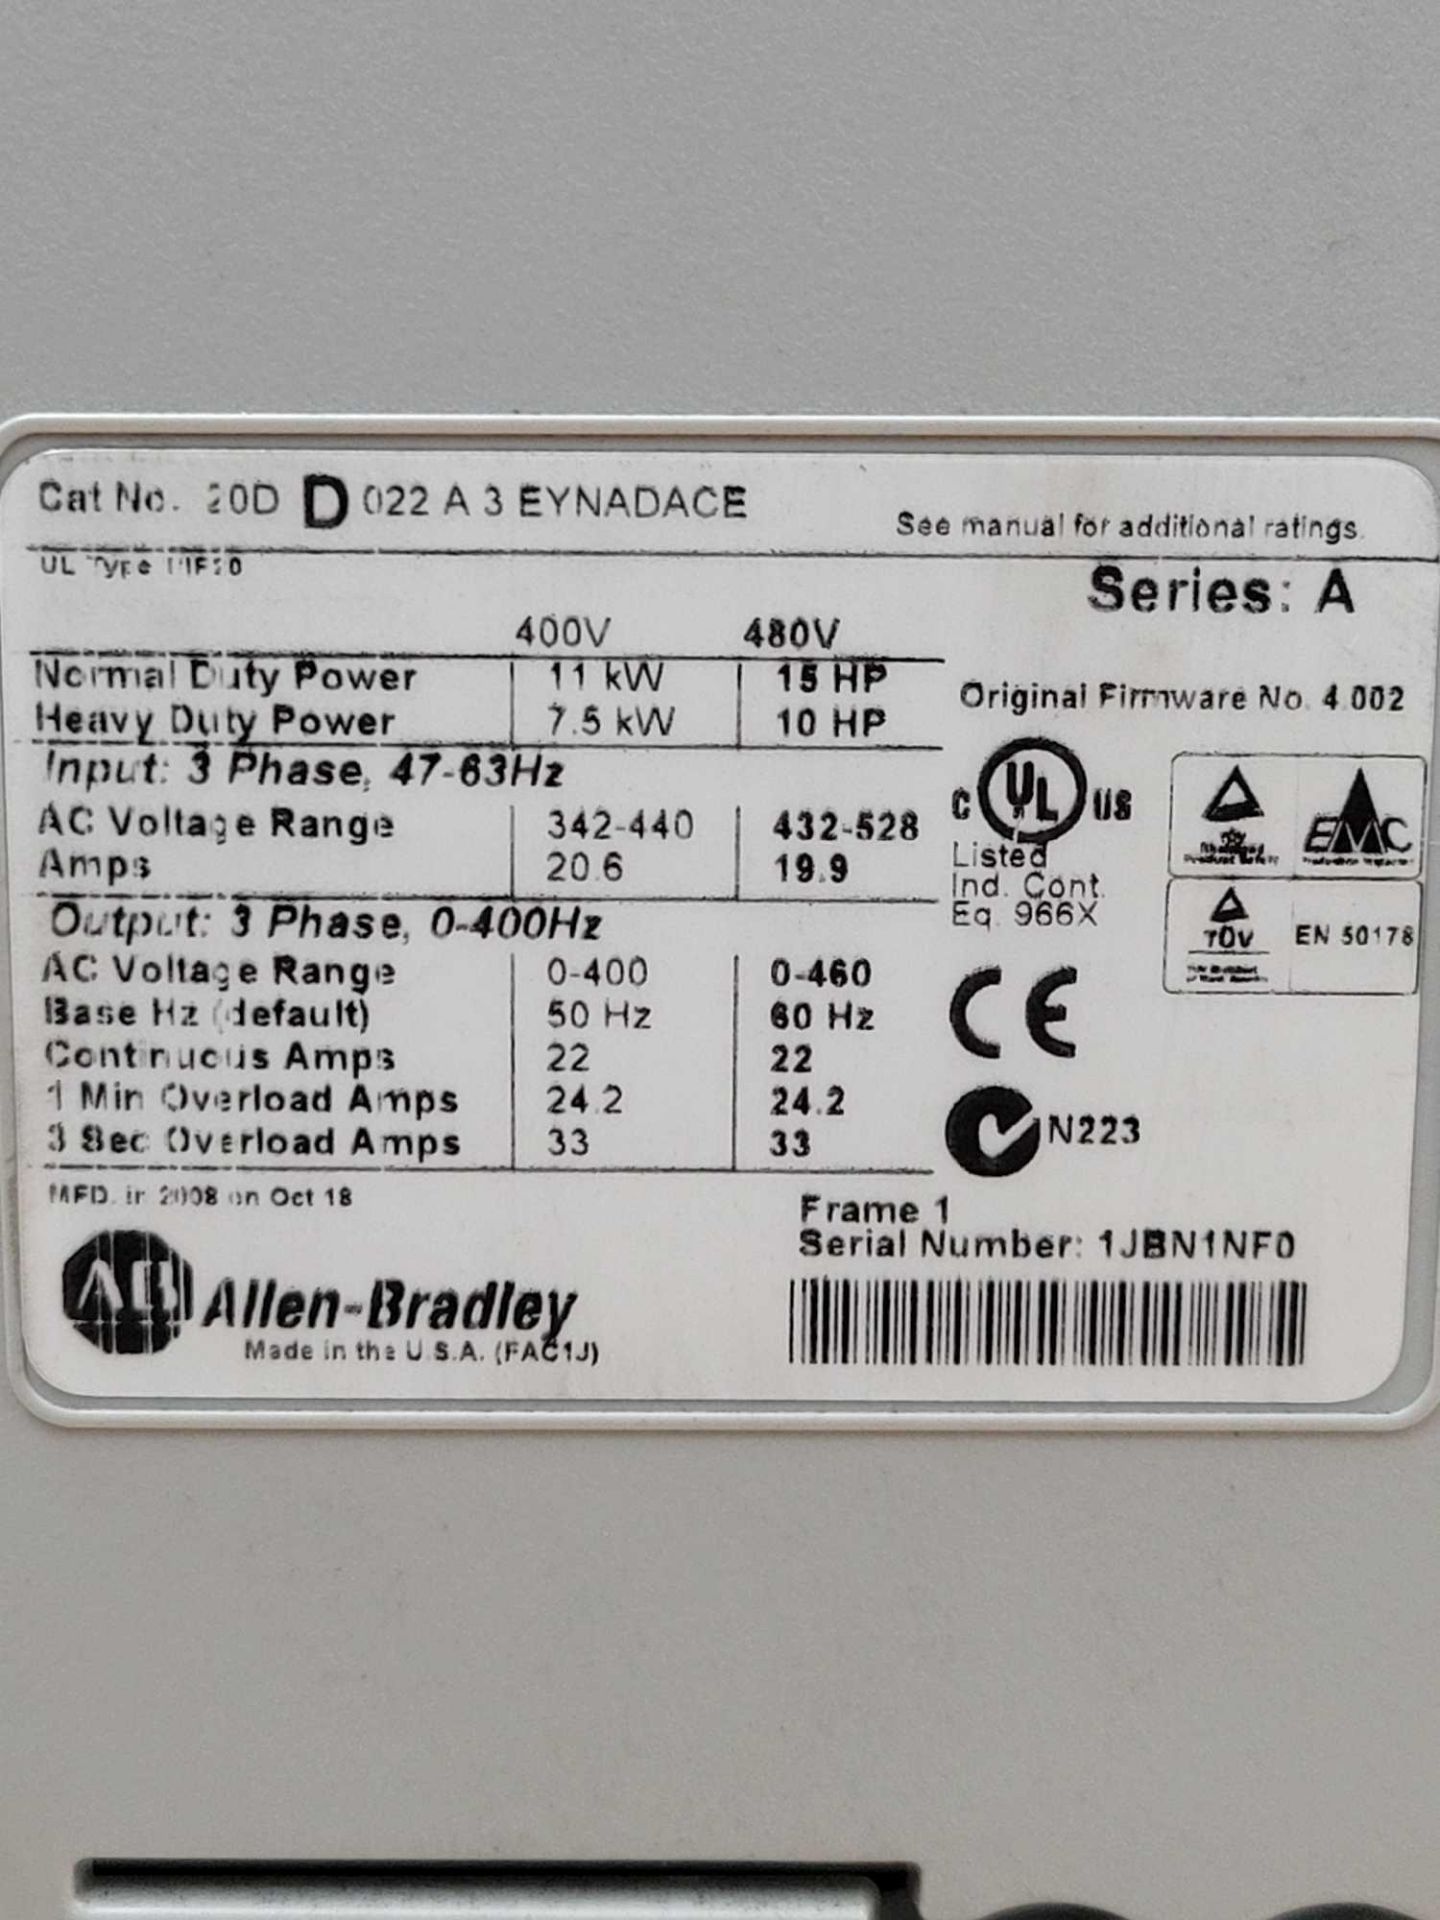 ALLEN BRADLEY 20DD022A3EYNADACE / Series A Powerflex 700S AC Drive  /  Lot Weight: 16.6 lbs - Image 5 of 7